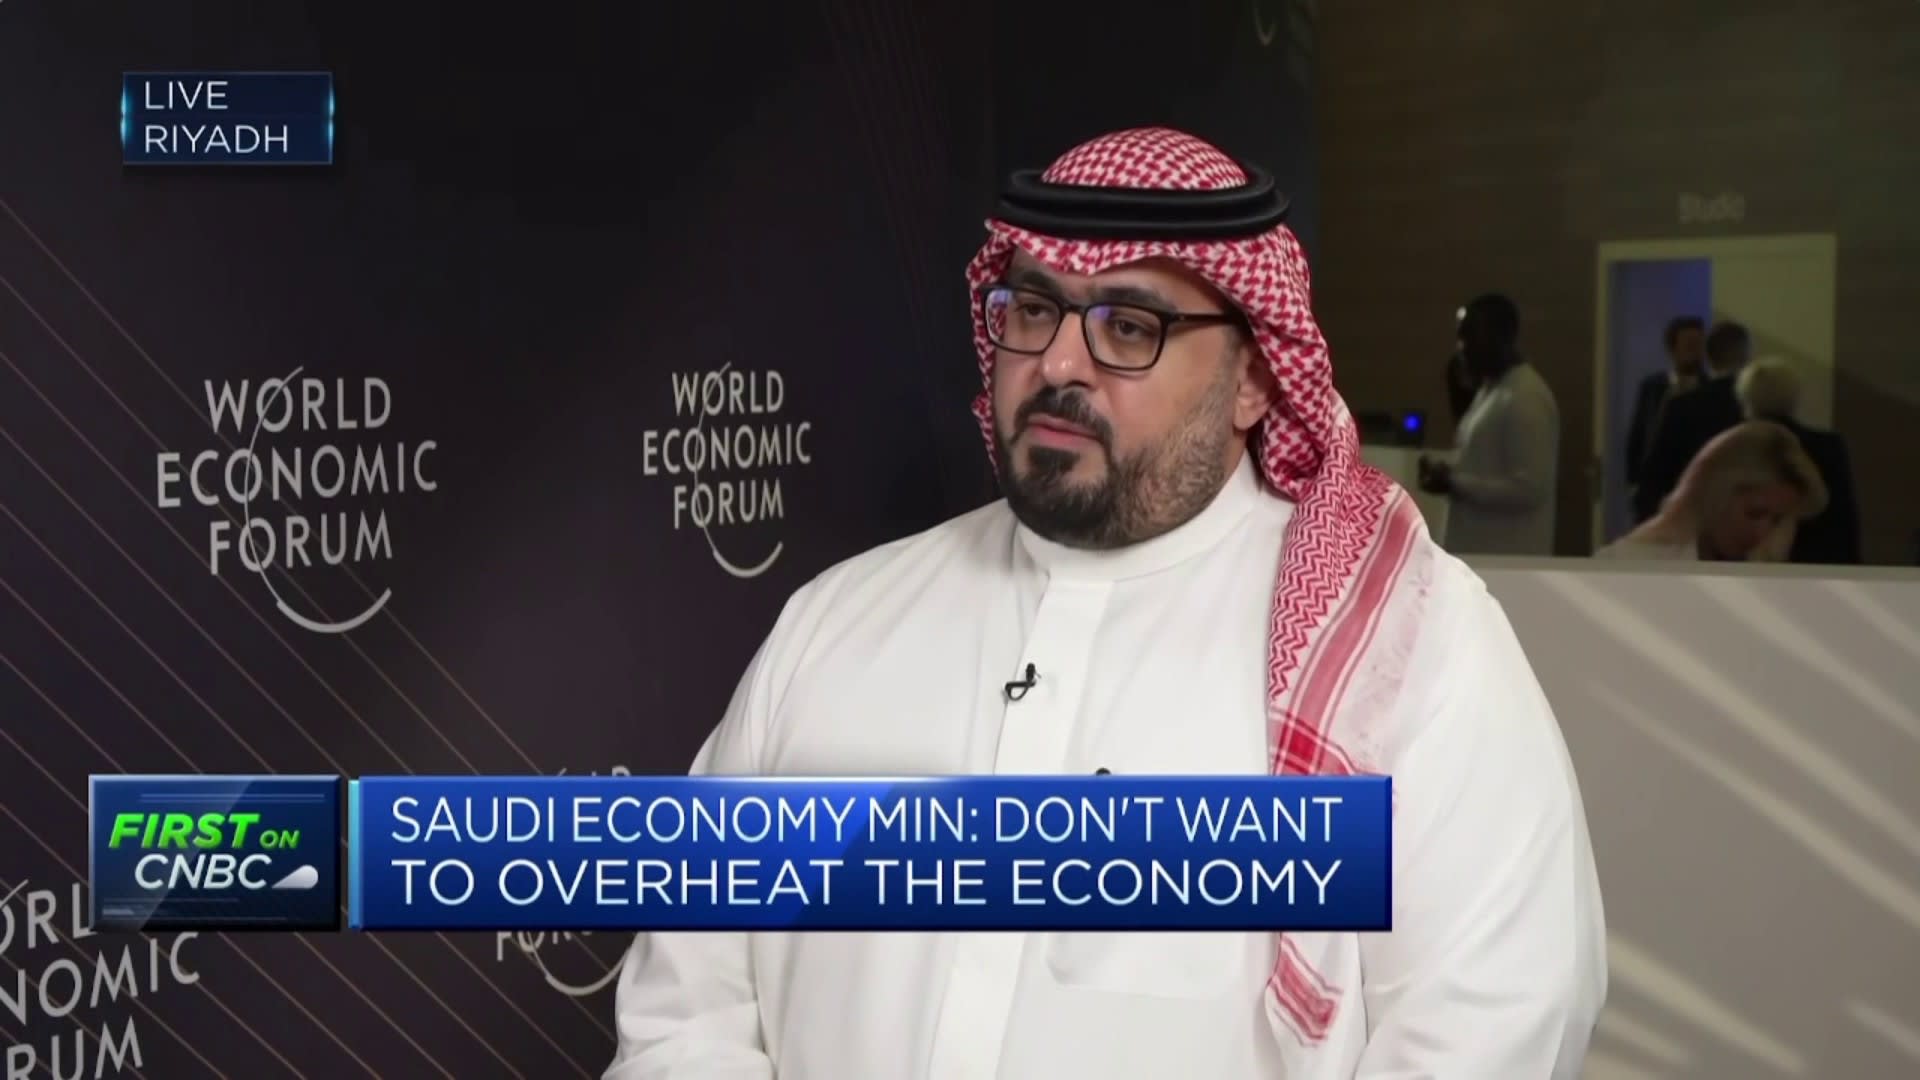 Saudi Arabias focus is on non-oil growth, economy minister says [Video]